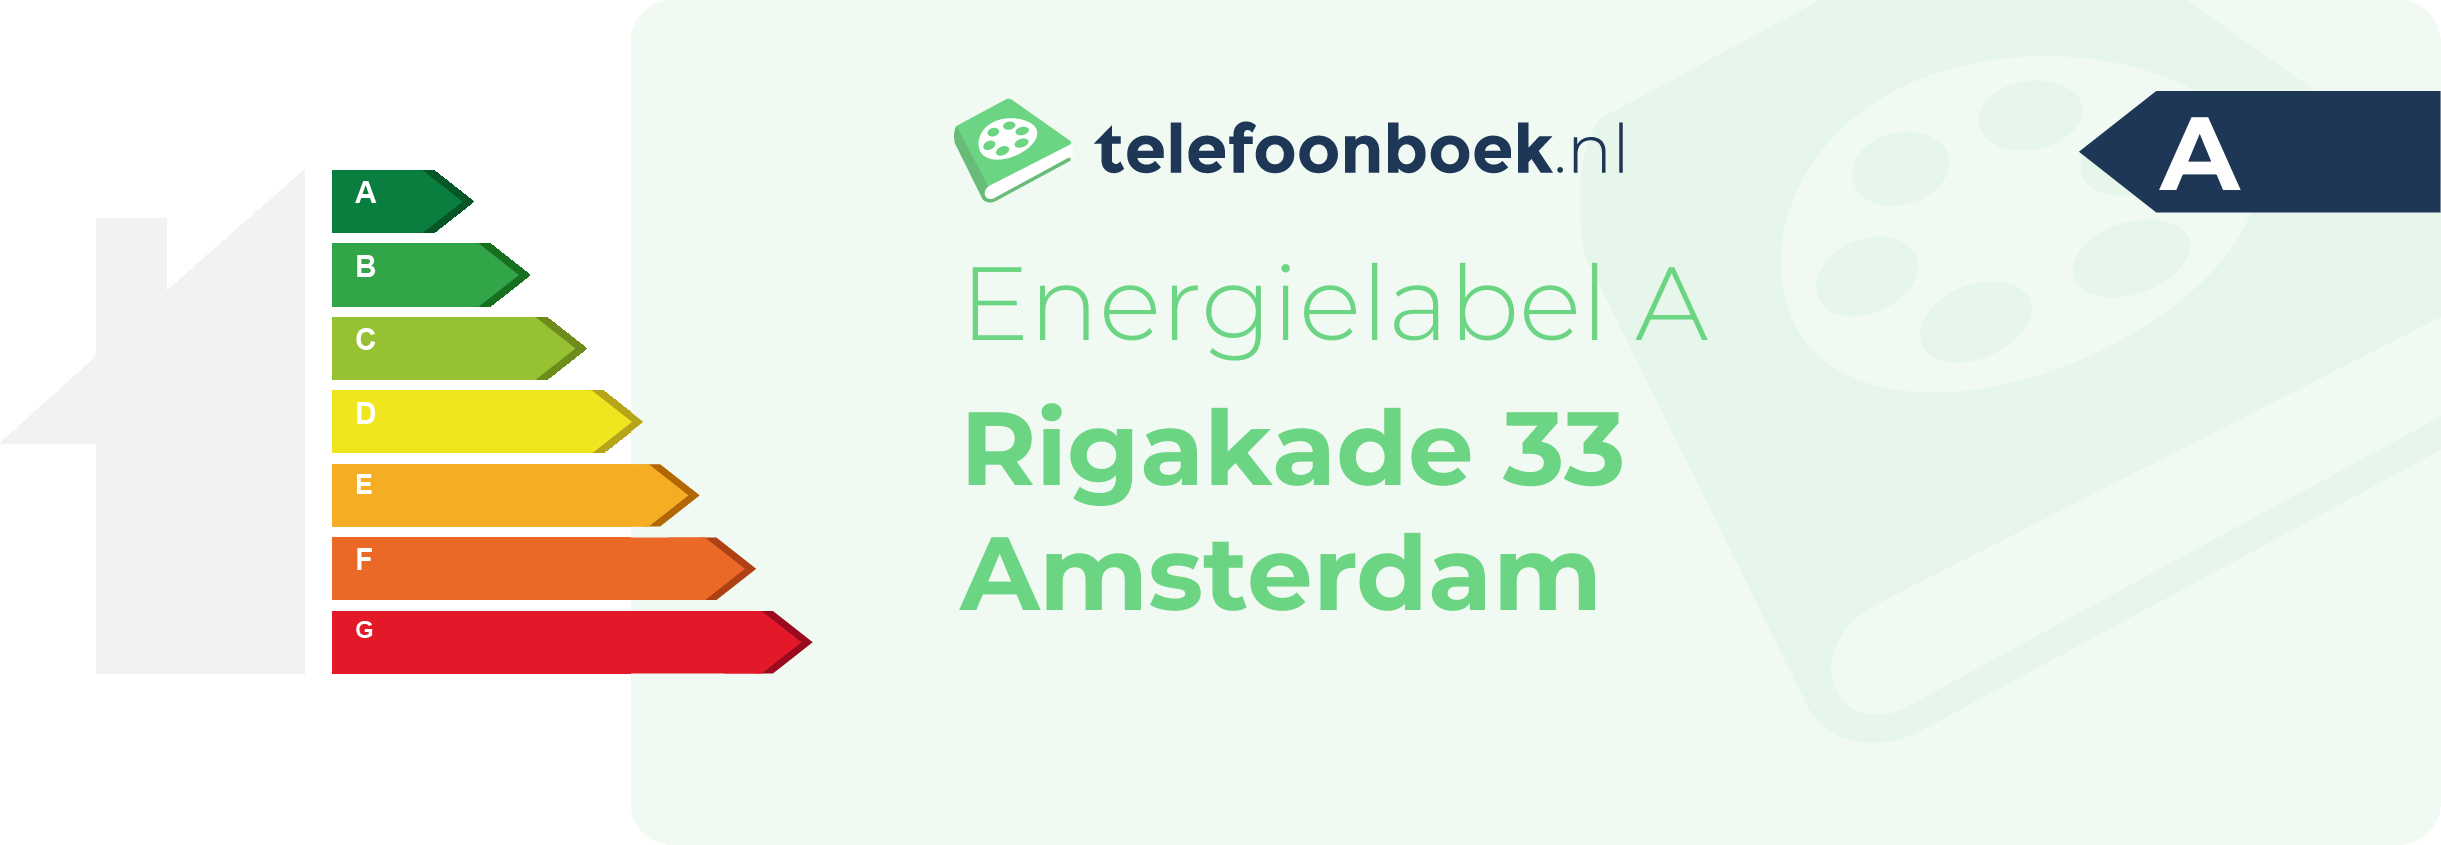 Energielabel Rigakade 33 Amsterdam